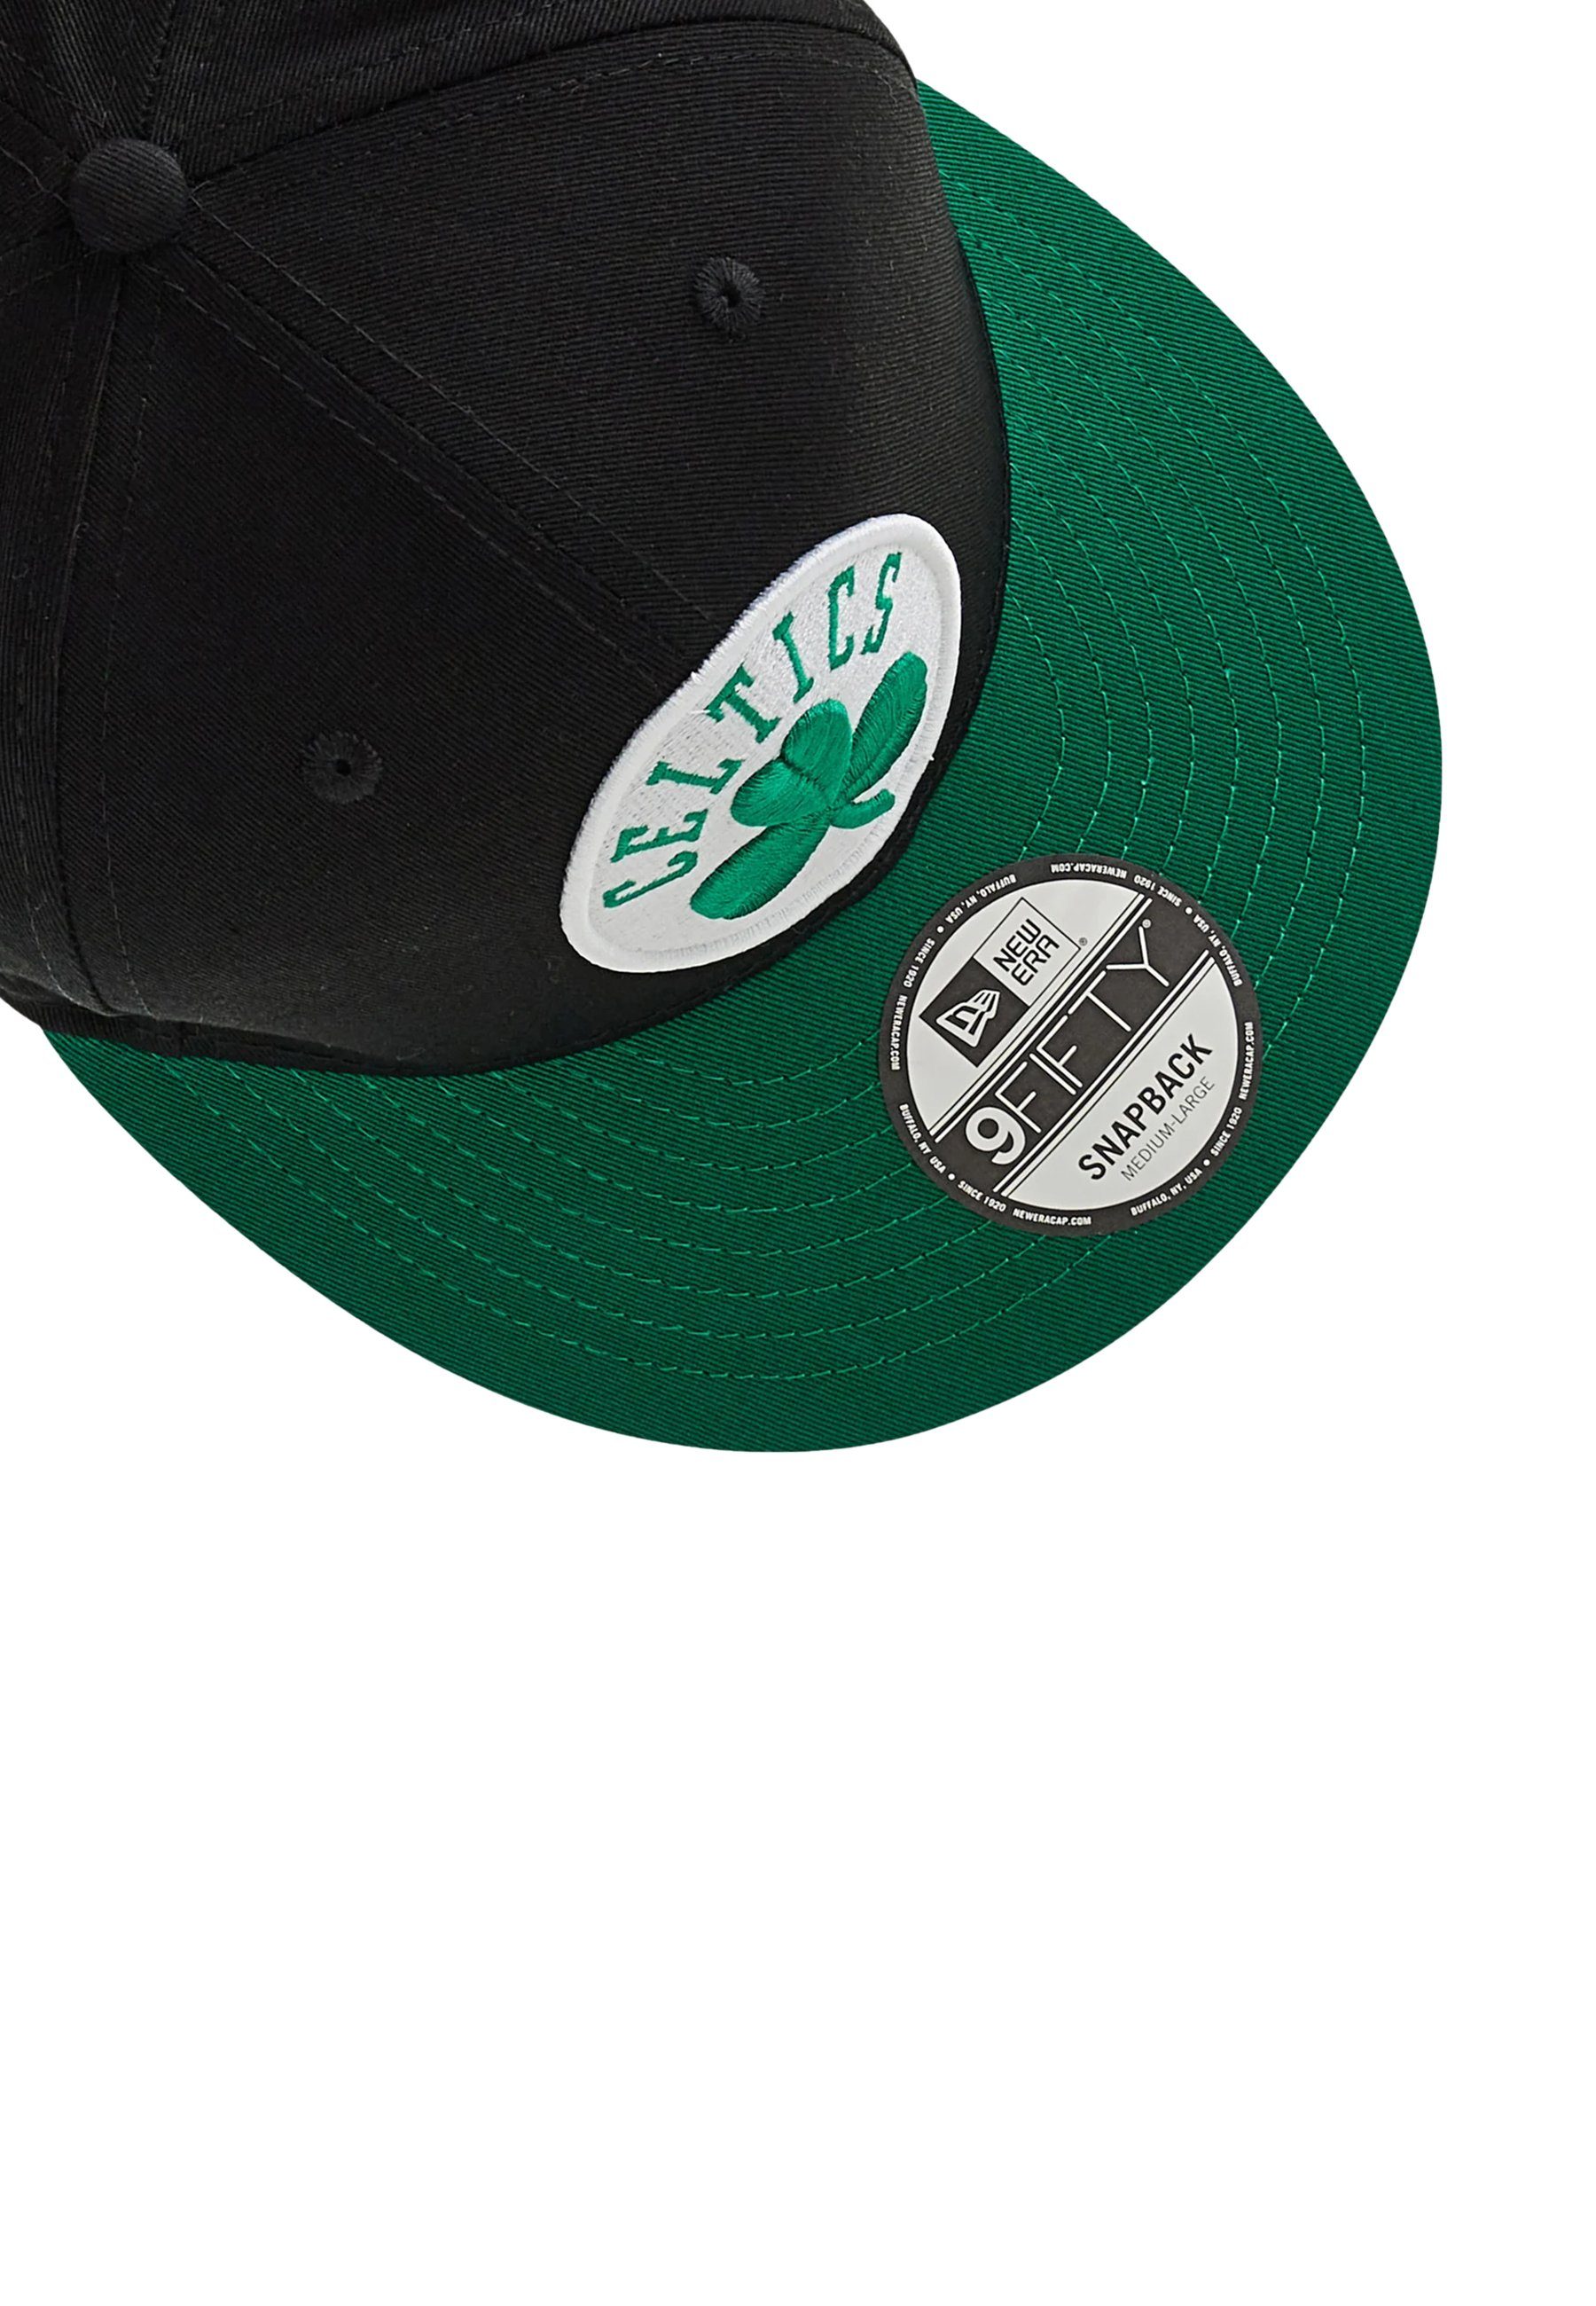 Celtics Snapback Era (1-St) New Boston Cap